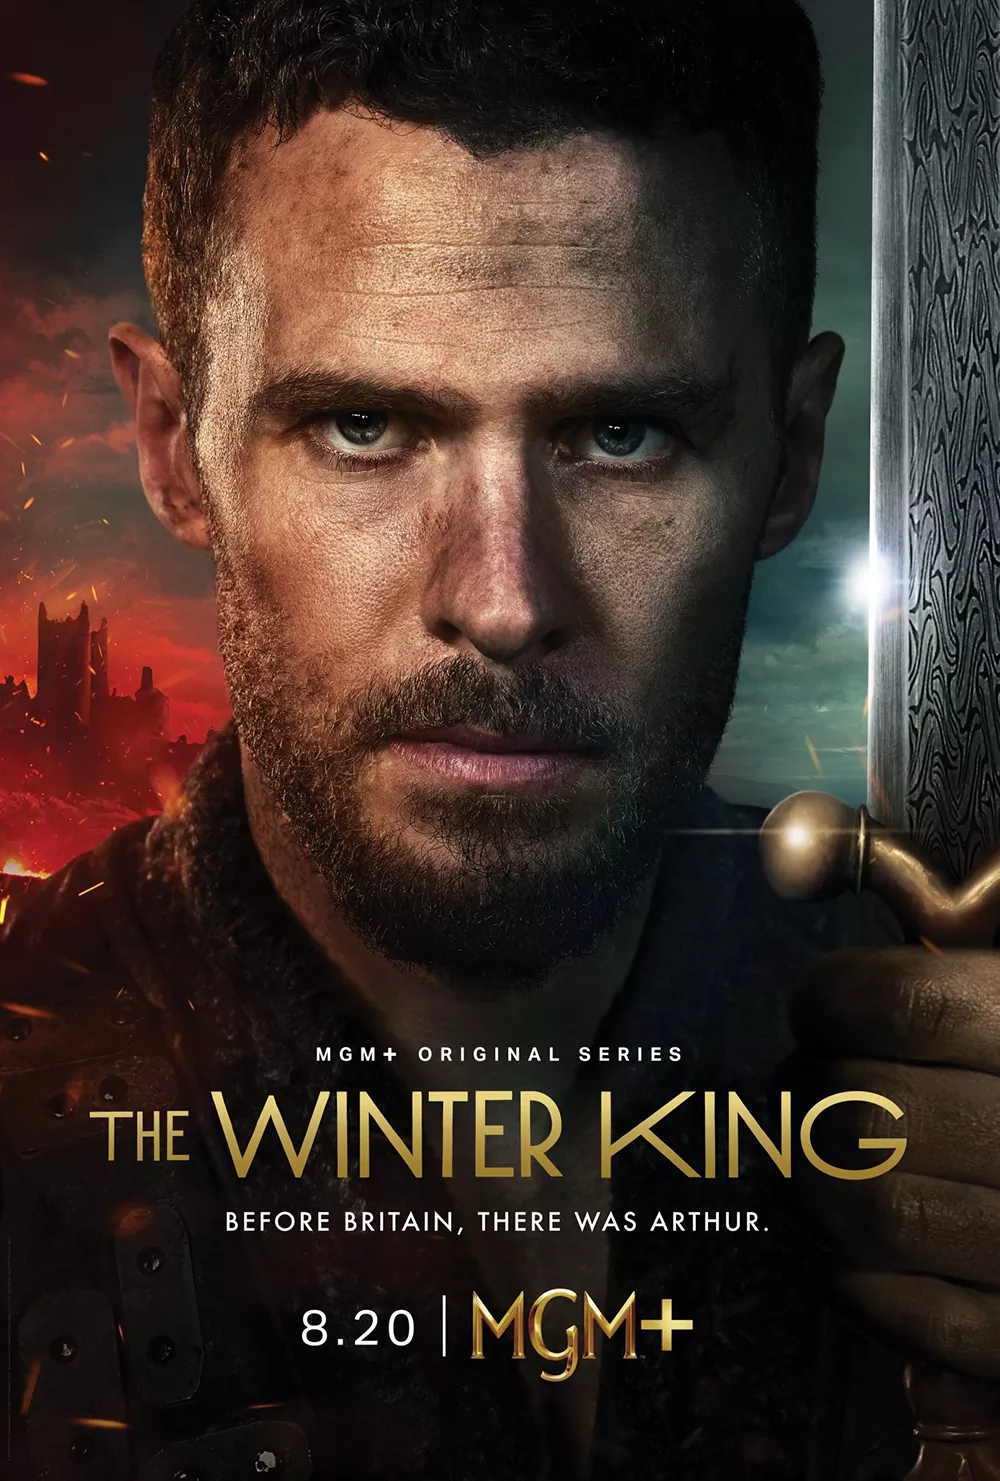 Trailer Από Τη νέα Σειρά "The Winter King"